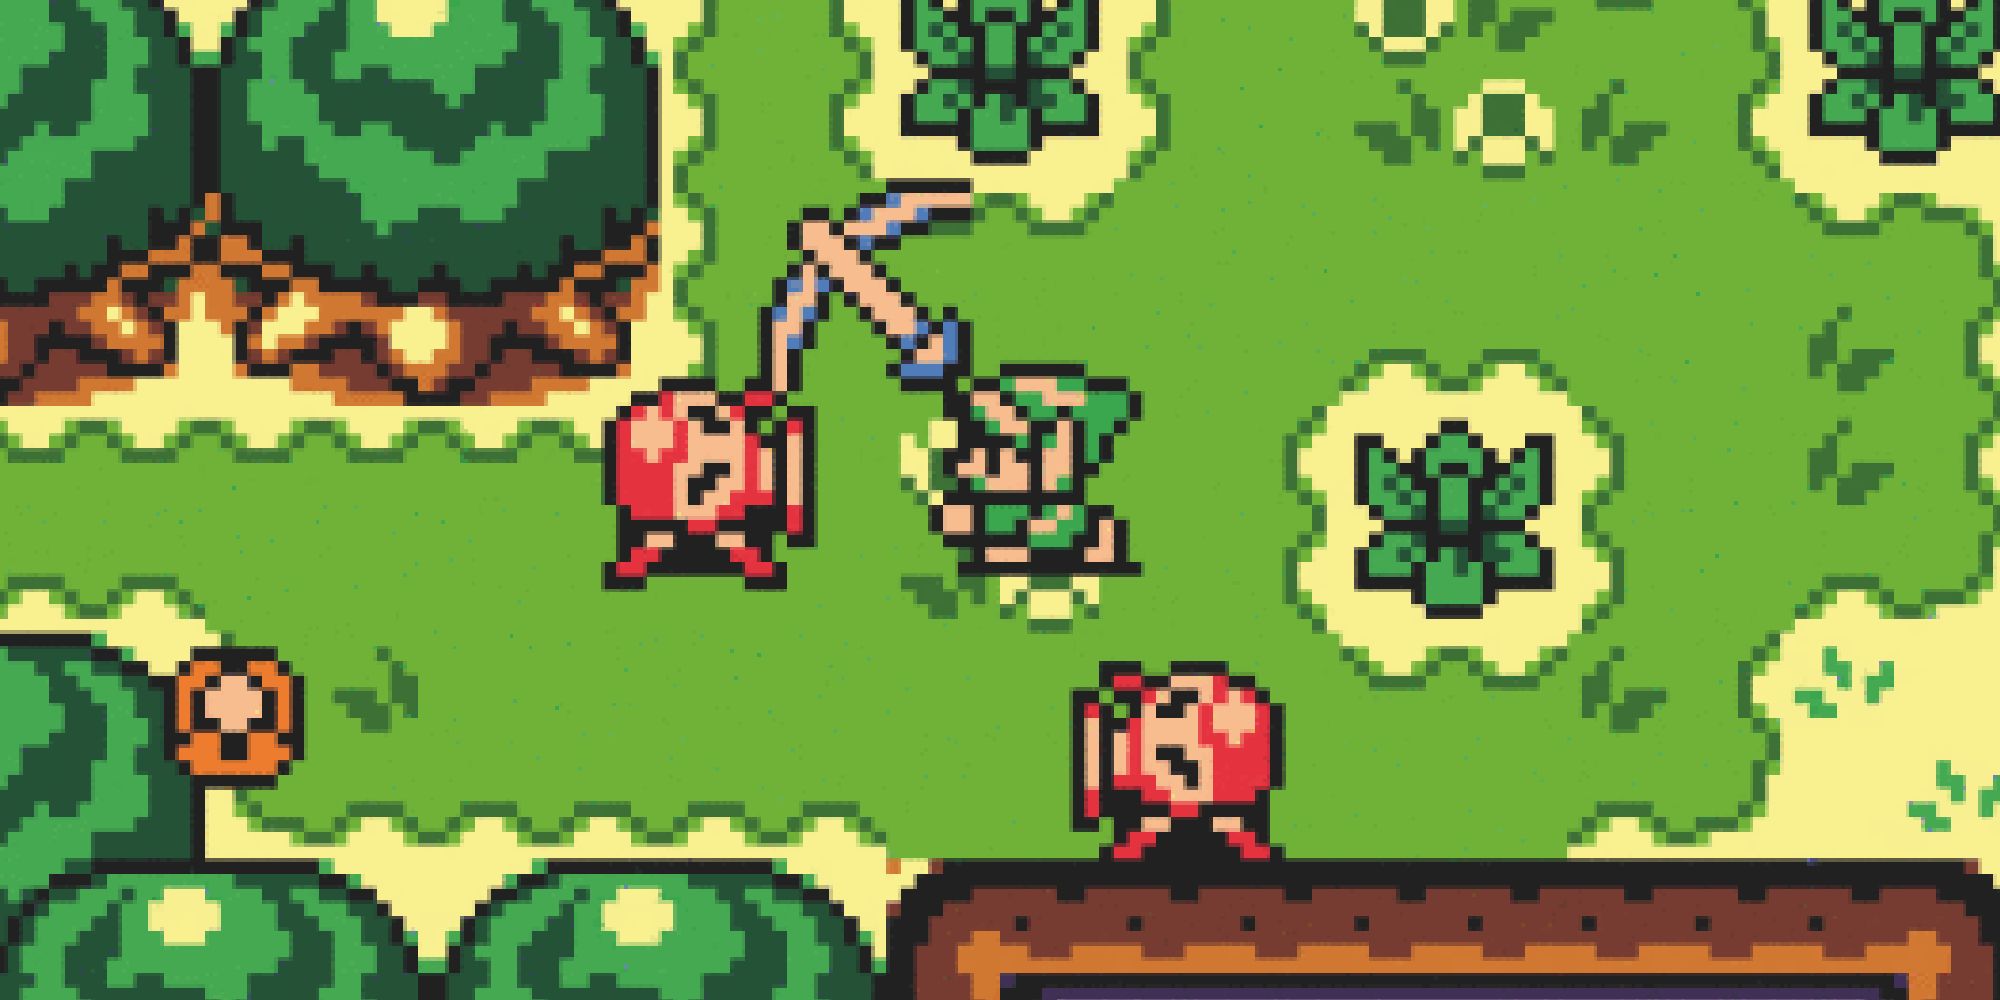 Link slashing at an Octorock in Link's Awakening on Gameboy Color